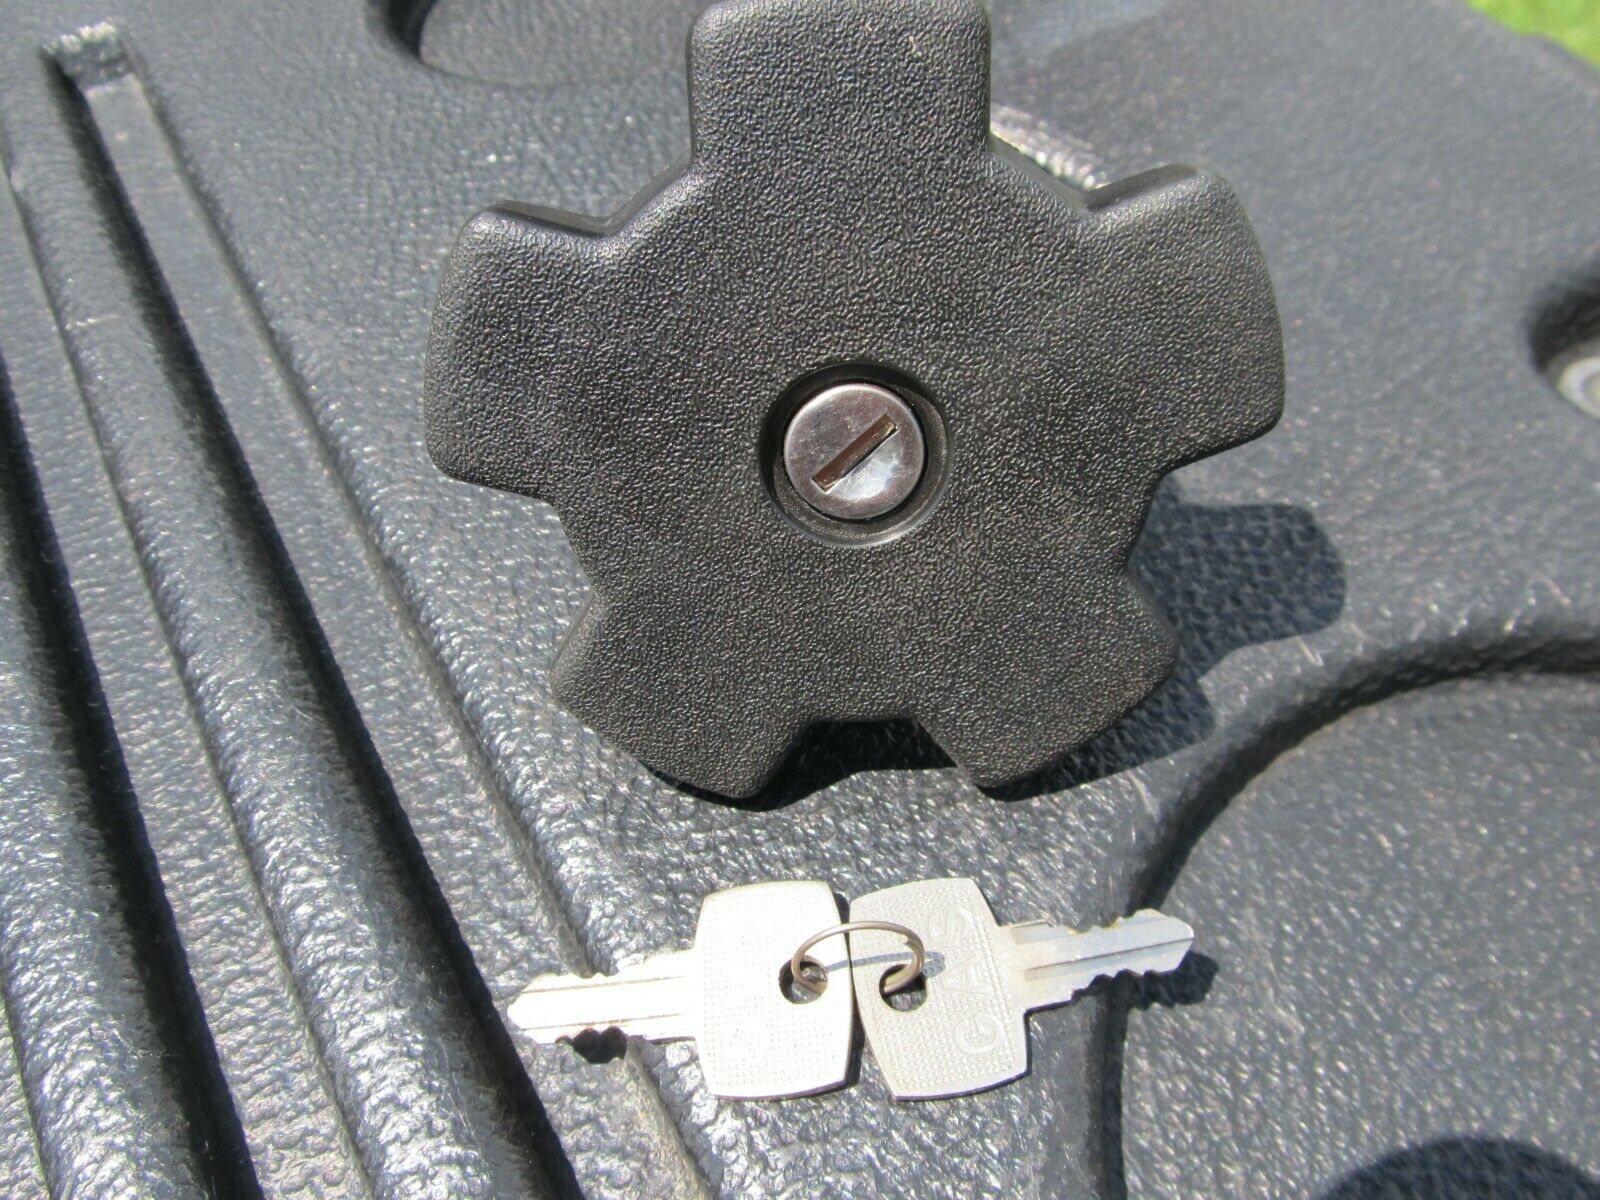 Vw Locking Gas Cap New Unused 2 Keys